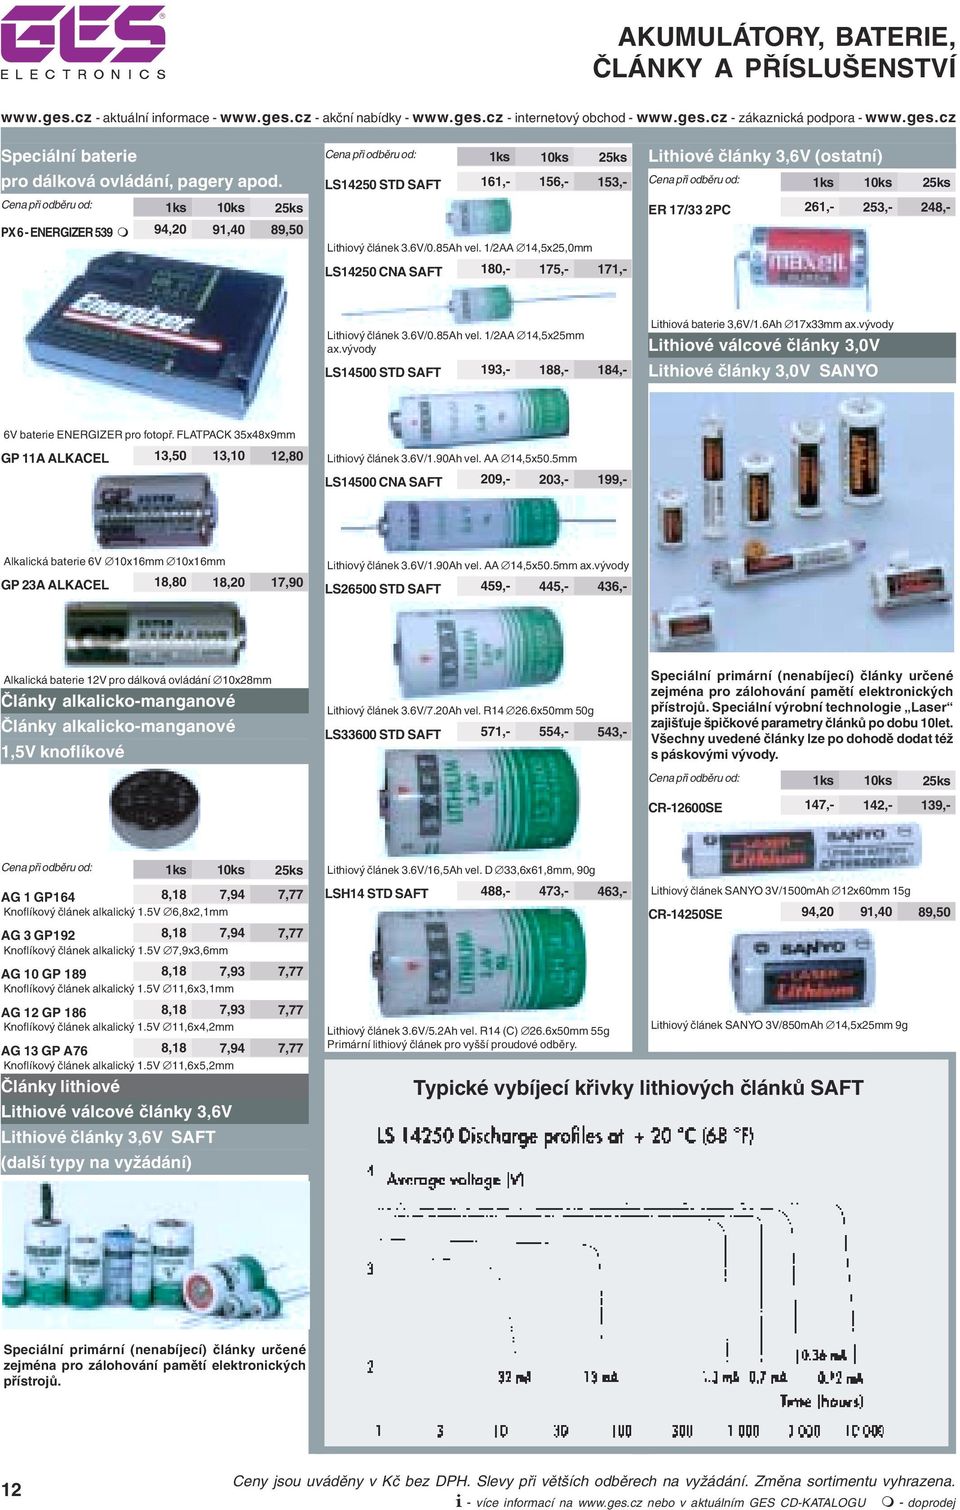 vývody LS14500 STD SAFT 193,- 188,- 184,- Lithiová baterie 3,6V/1.6Ah 17x33mm ax.vývody Lithiové válcové články 3,0V Lithiové články 3,0V SANYO 6V baterie ENERGIZER pro fotopř.